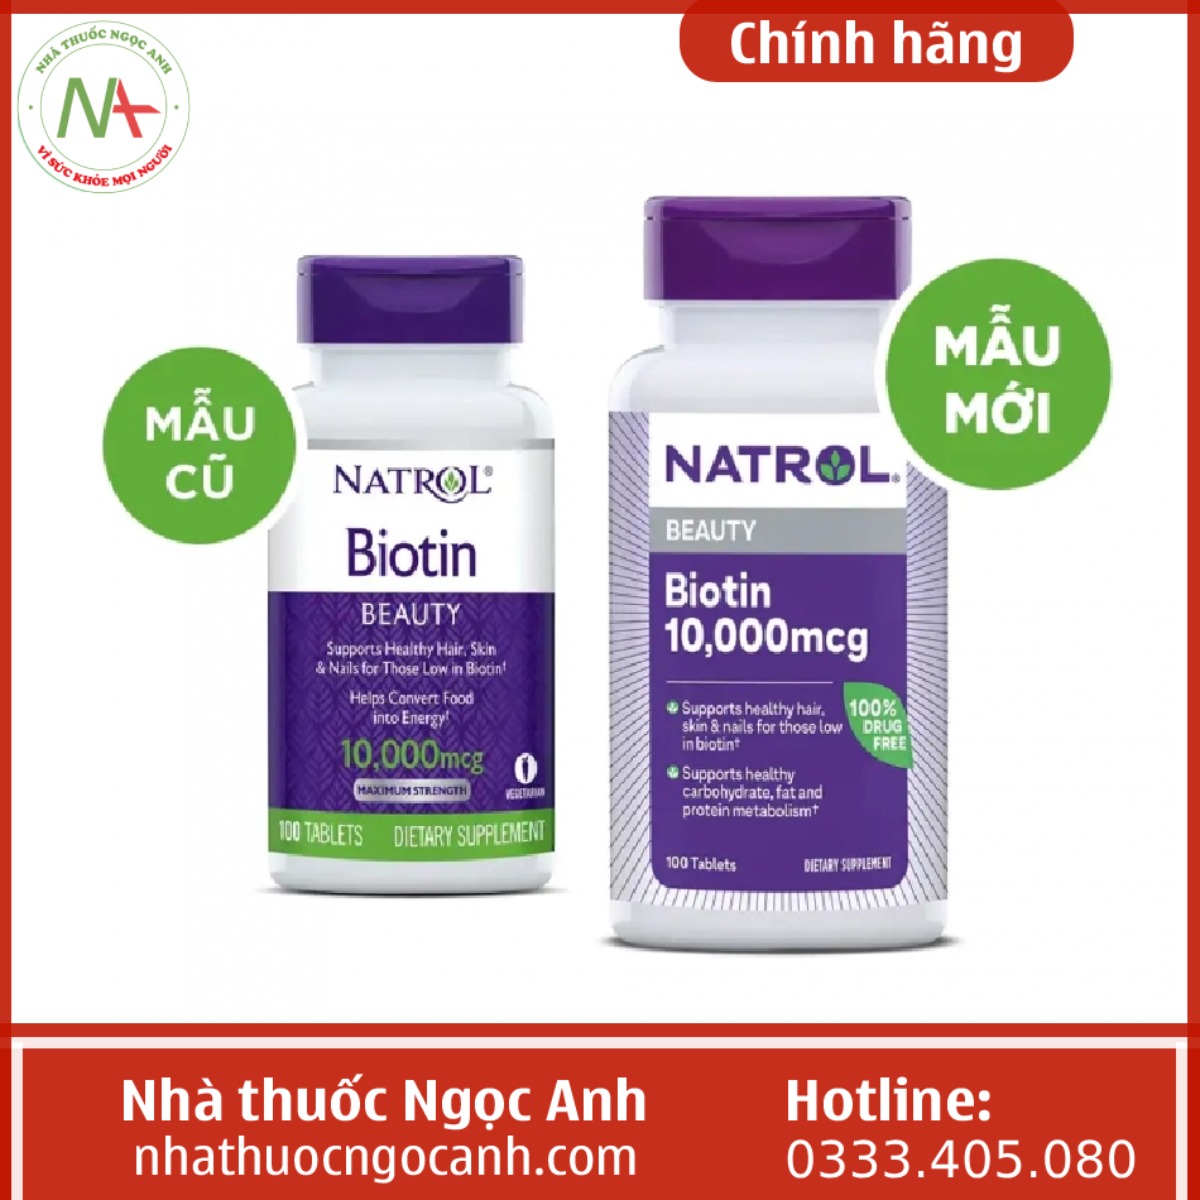 Natrol Beauty Biotin 10,000mcg